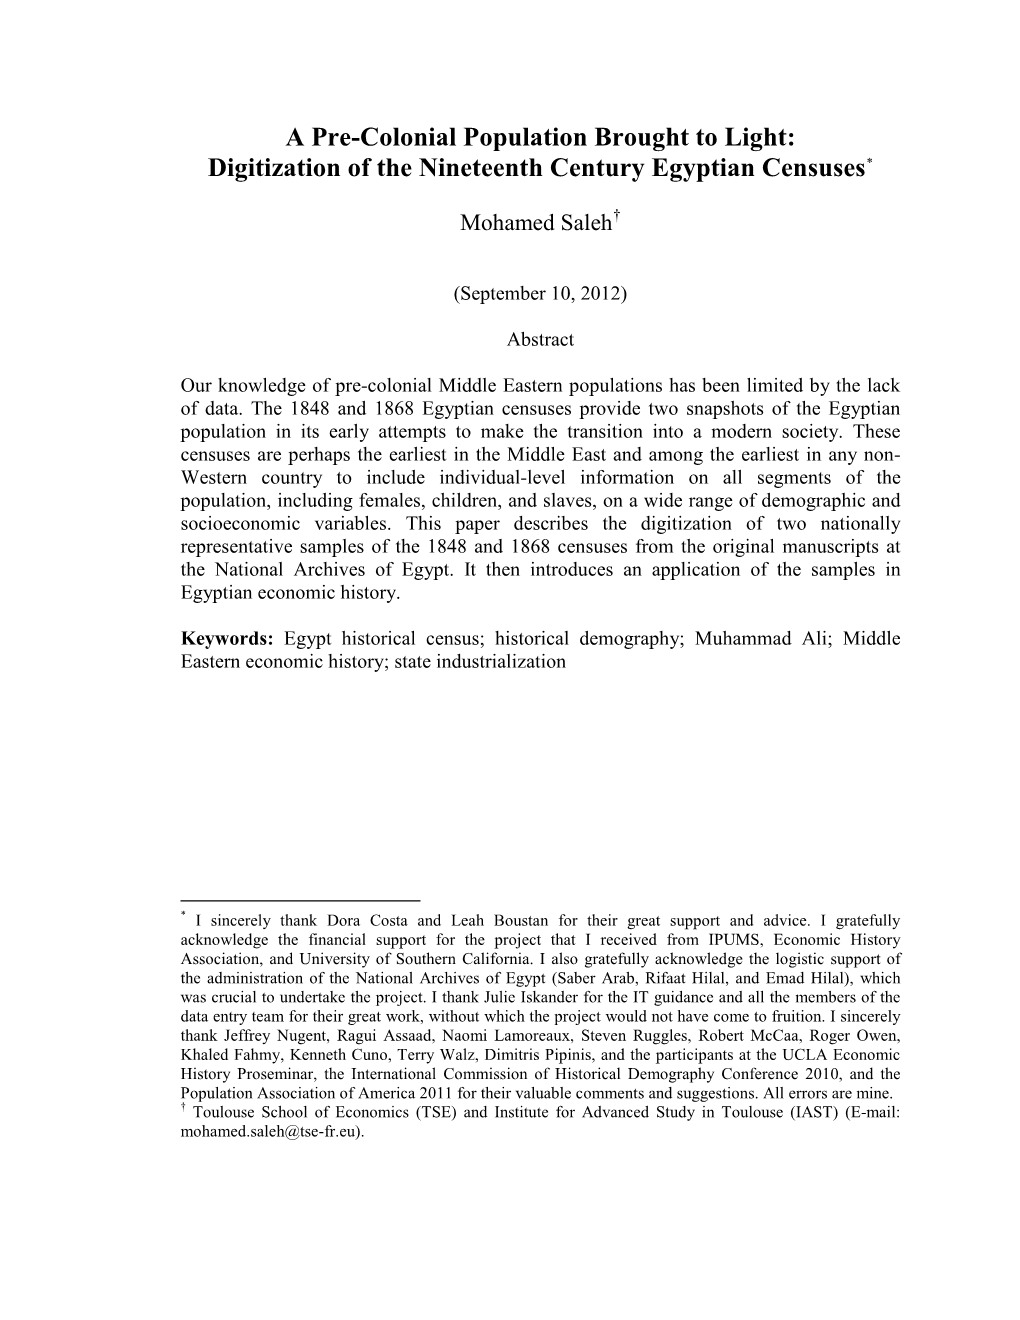 Digitization of the Nineteenth Century Egyptian Censuses*